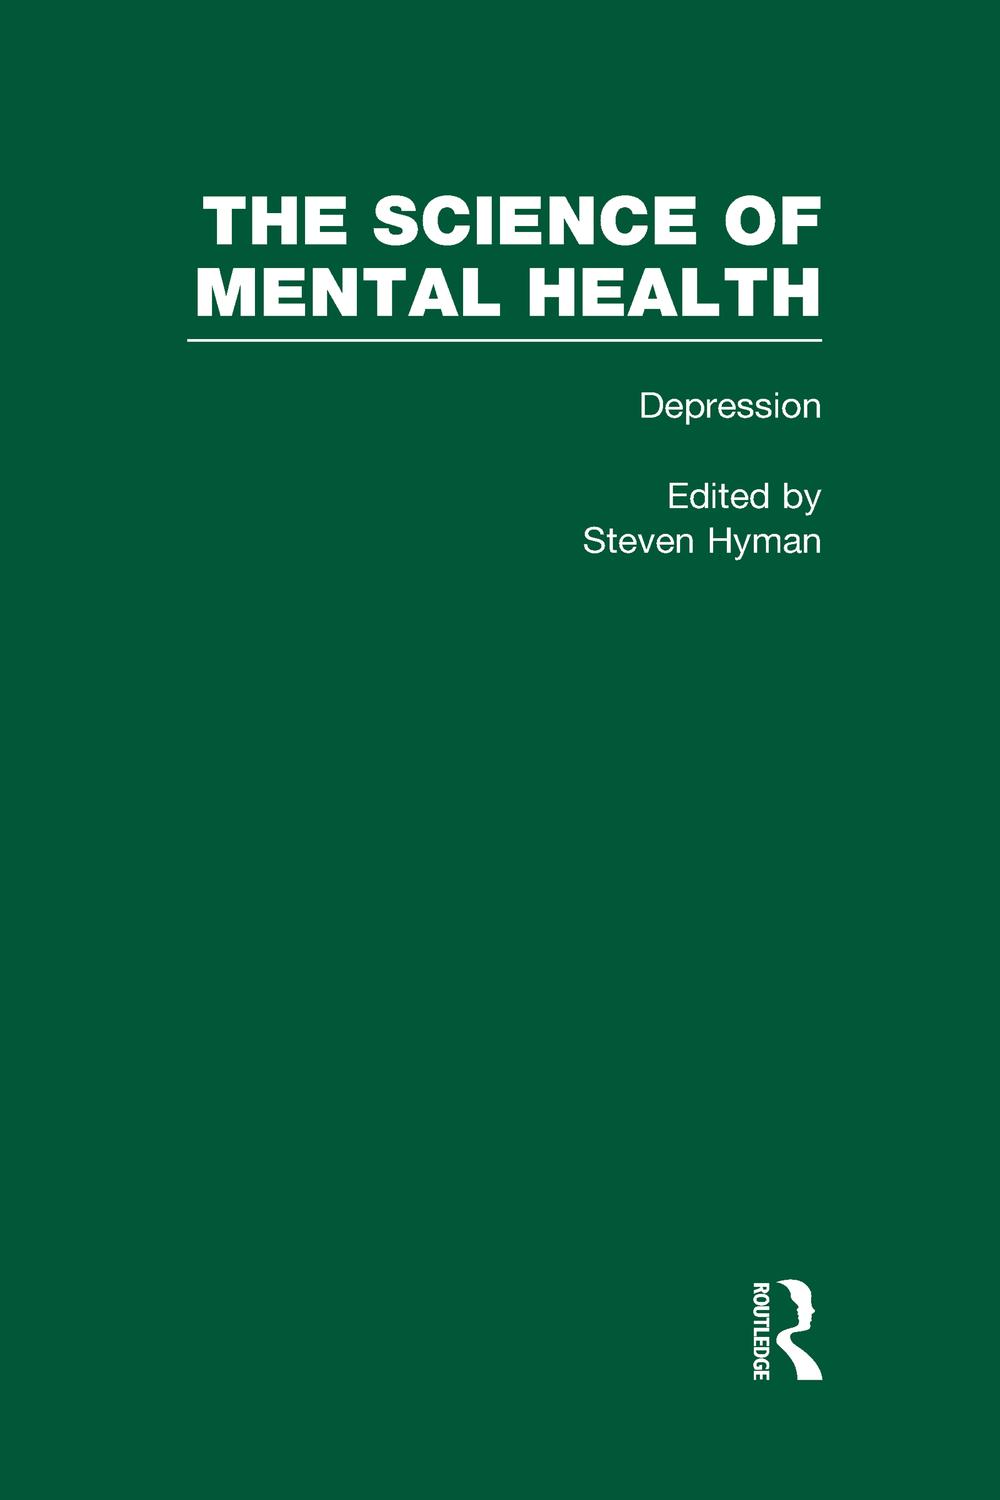 Depression - Steven E. Hyman